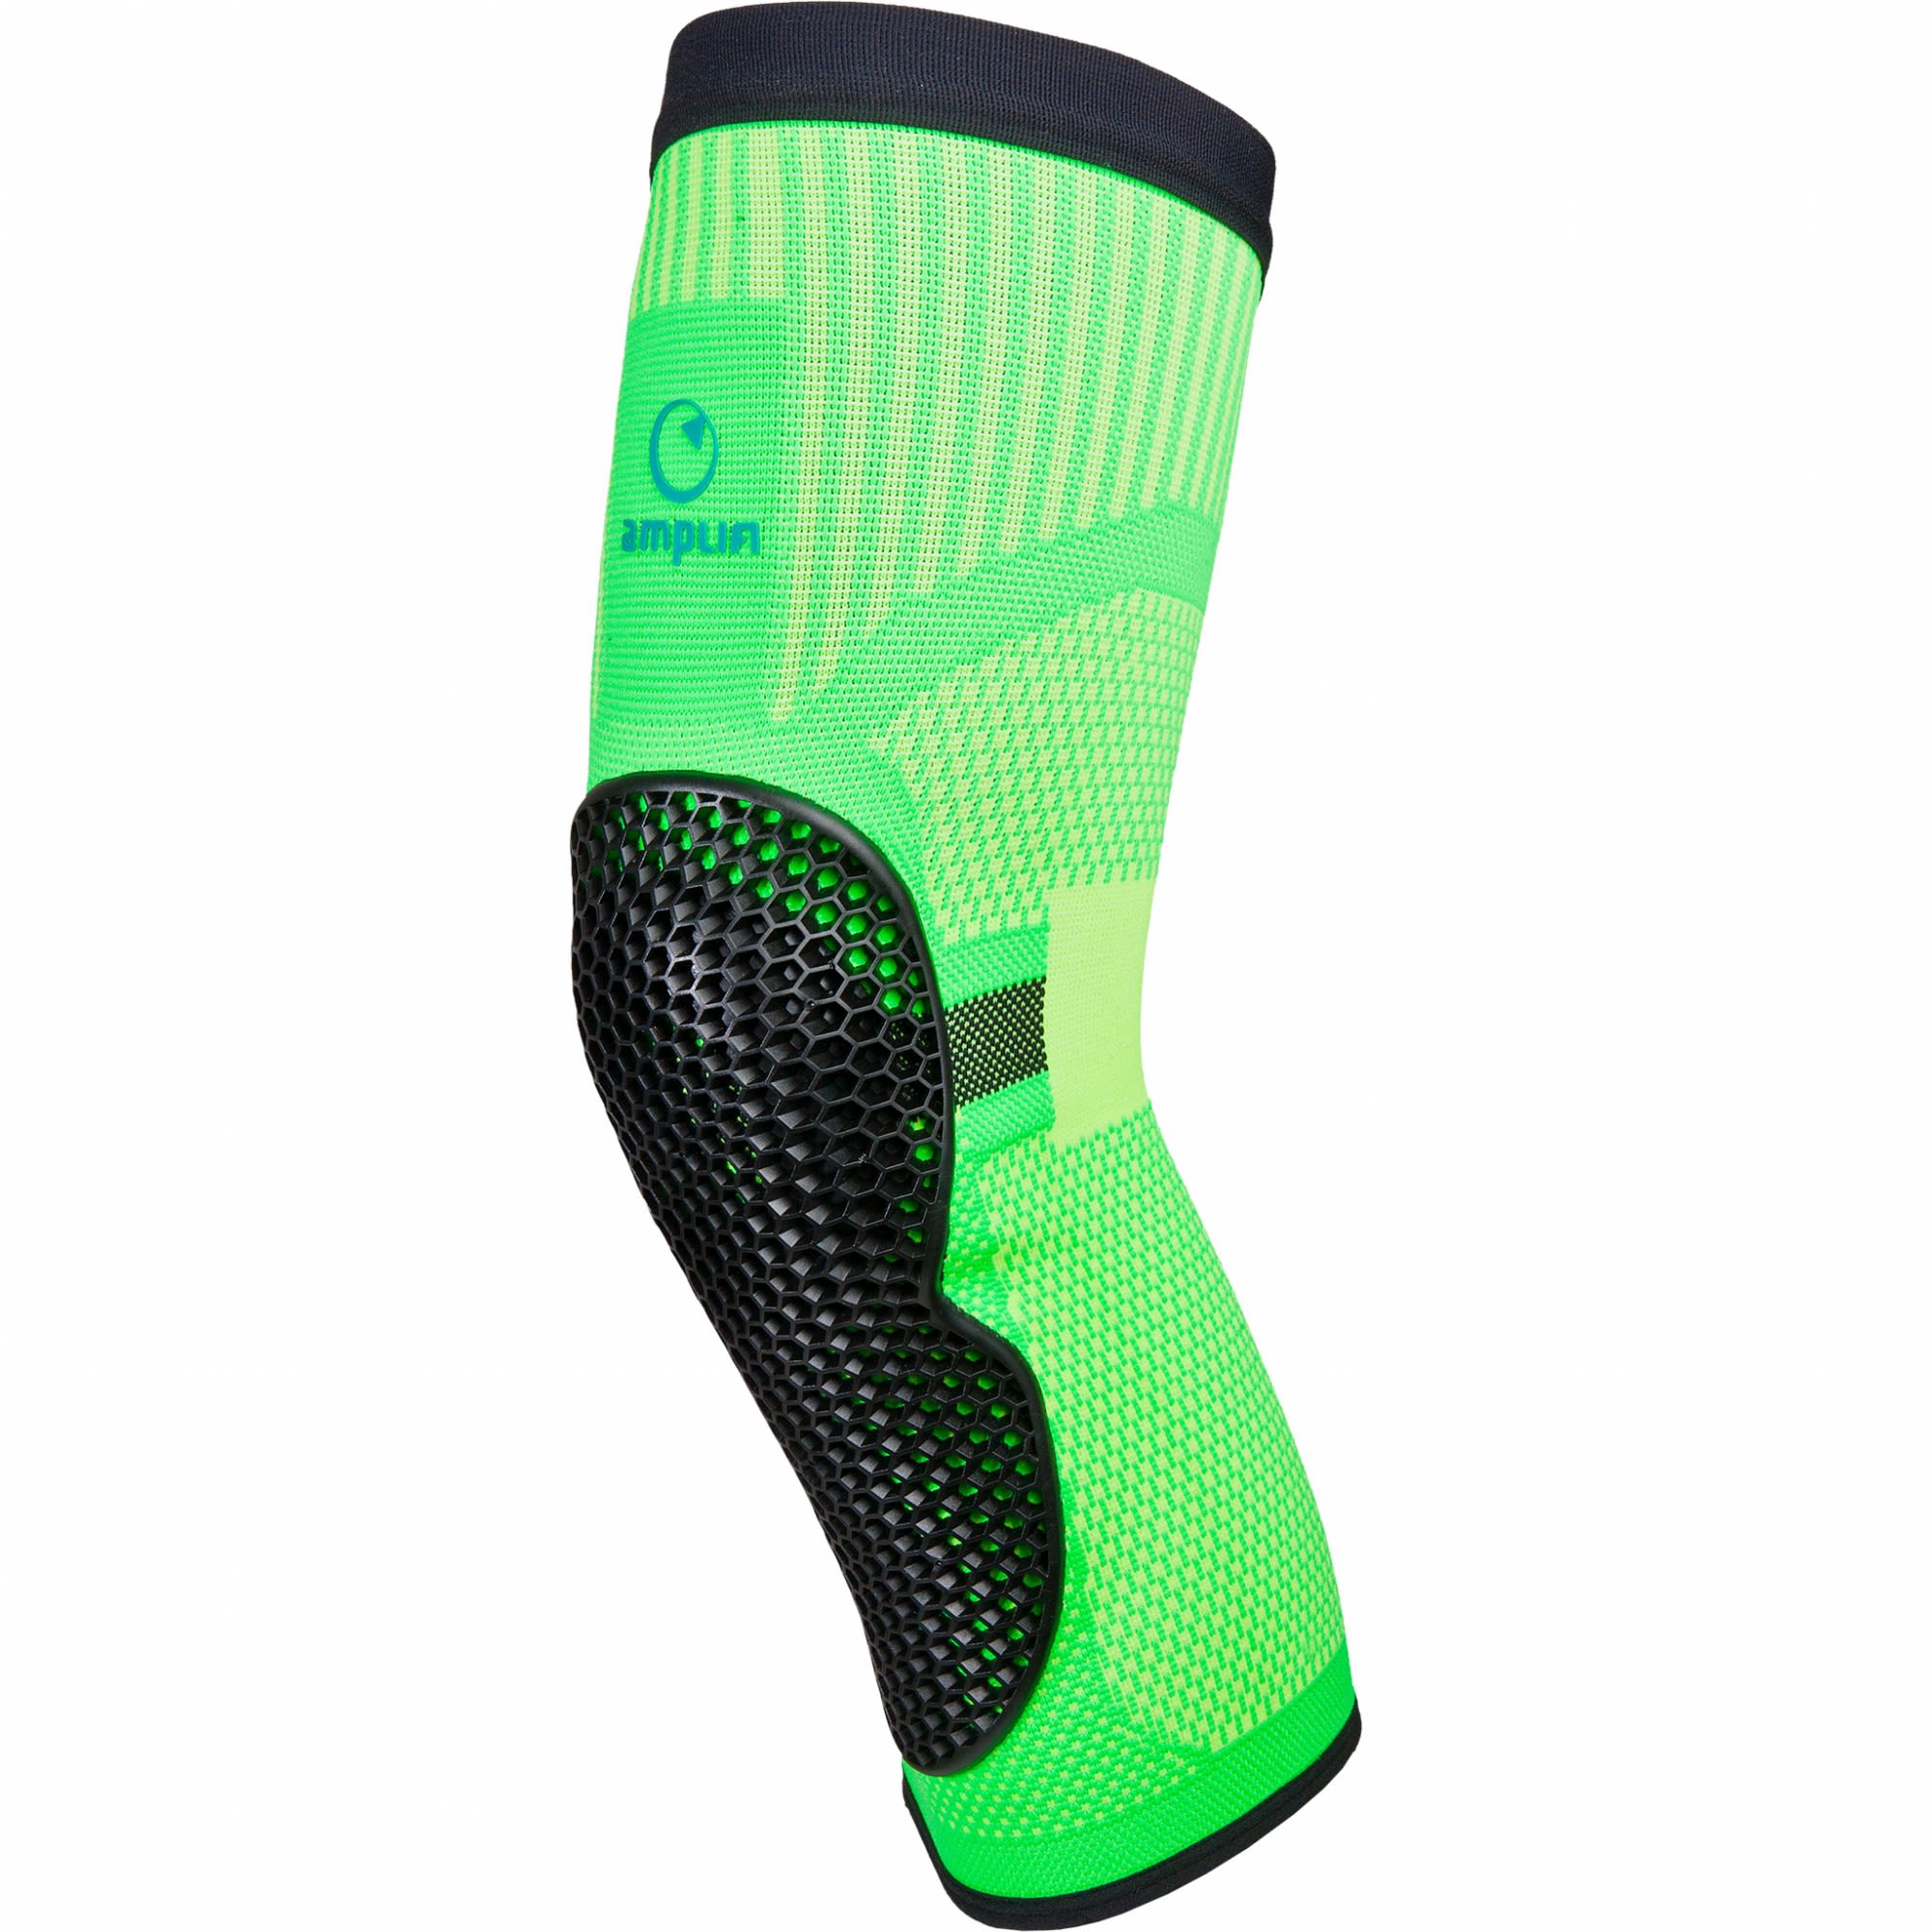 Amplifi MKX Knee Grn- Knieprotektoren- Grsse S - Farbe Phosphor Green unter Amplifi